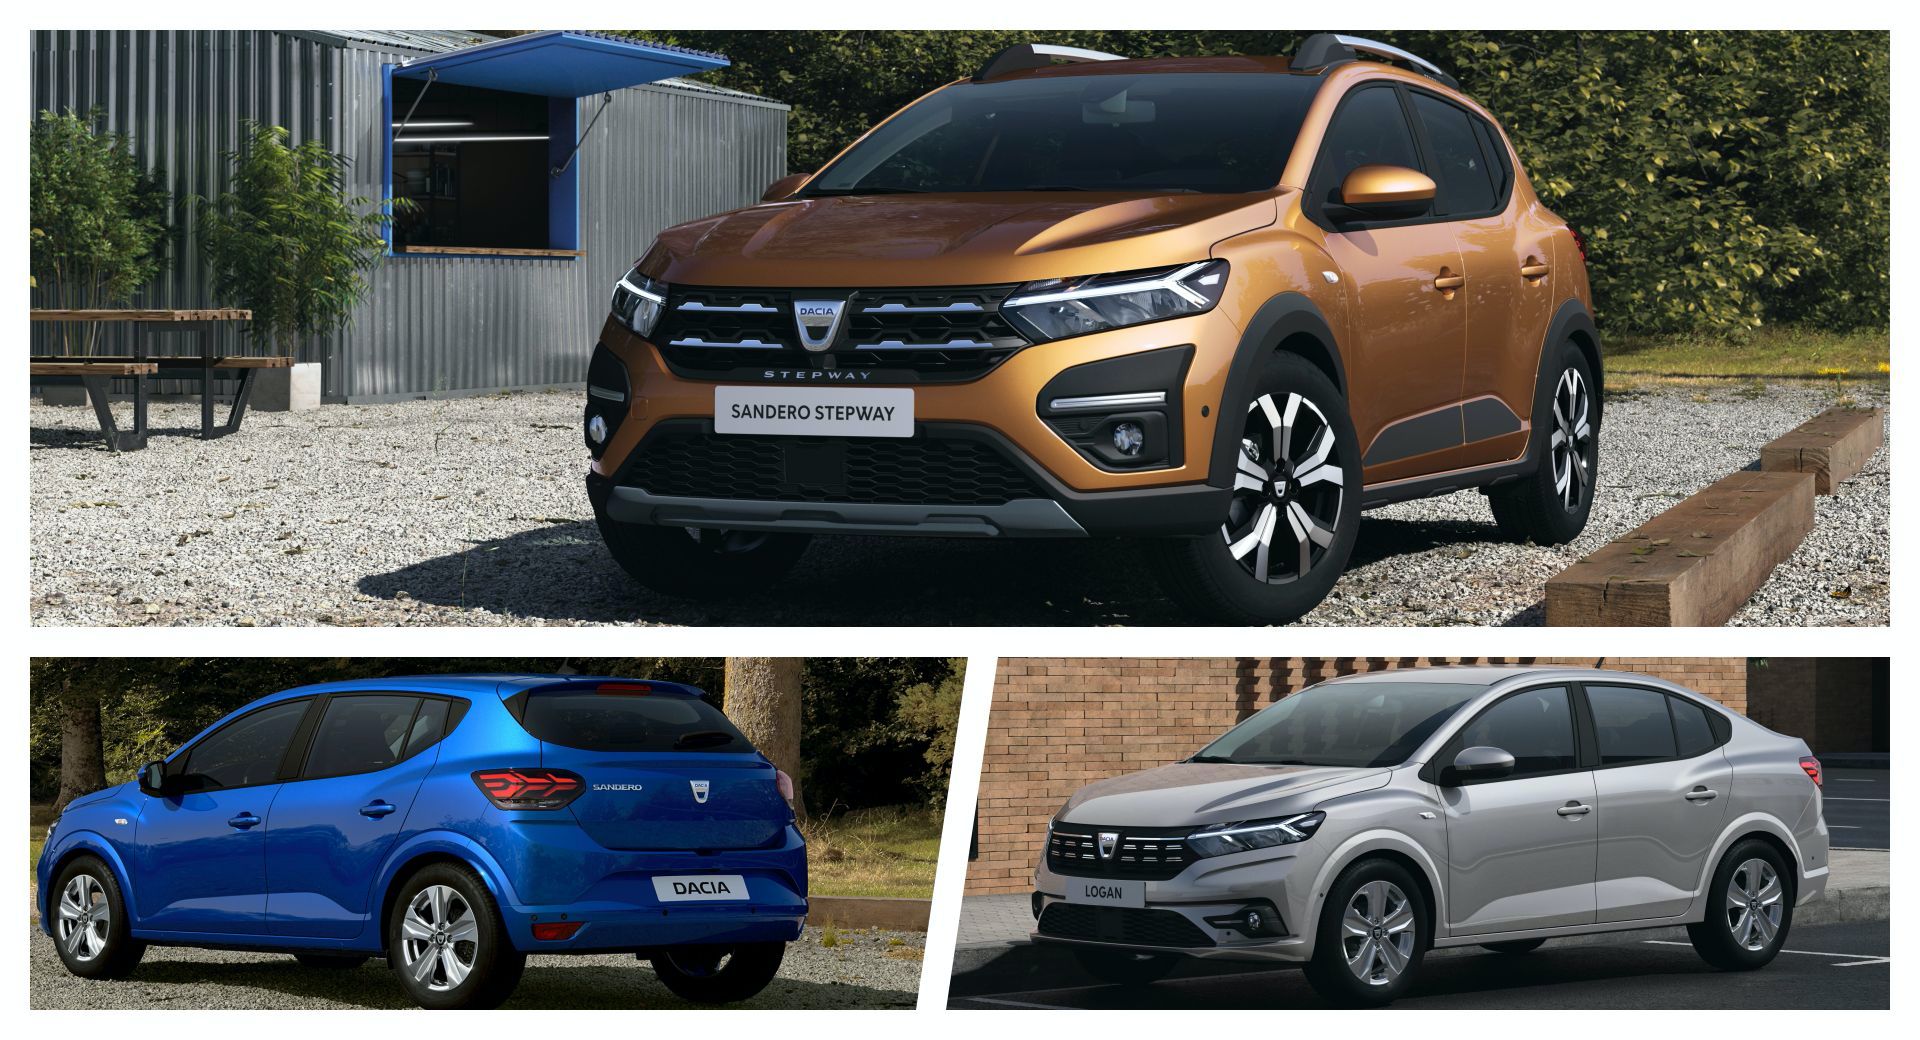 First Drive Review: Dacia Sandero and Sandero Stepway